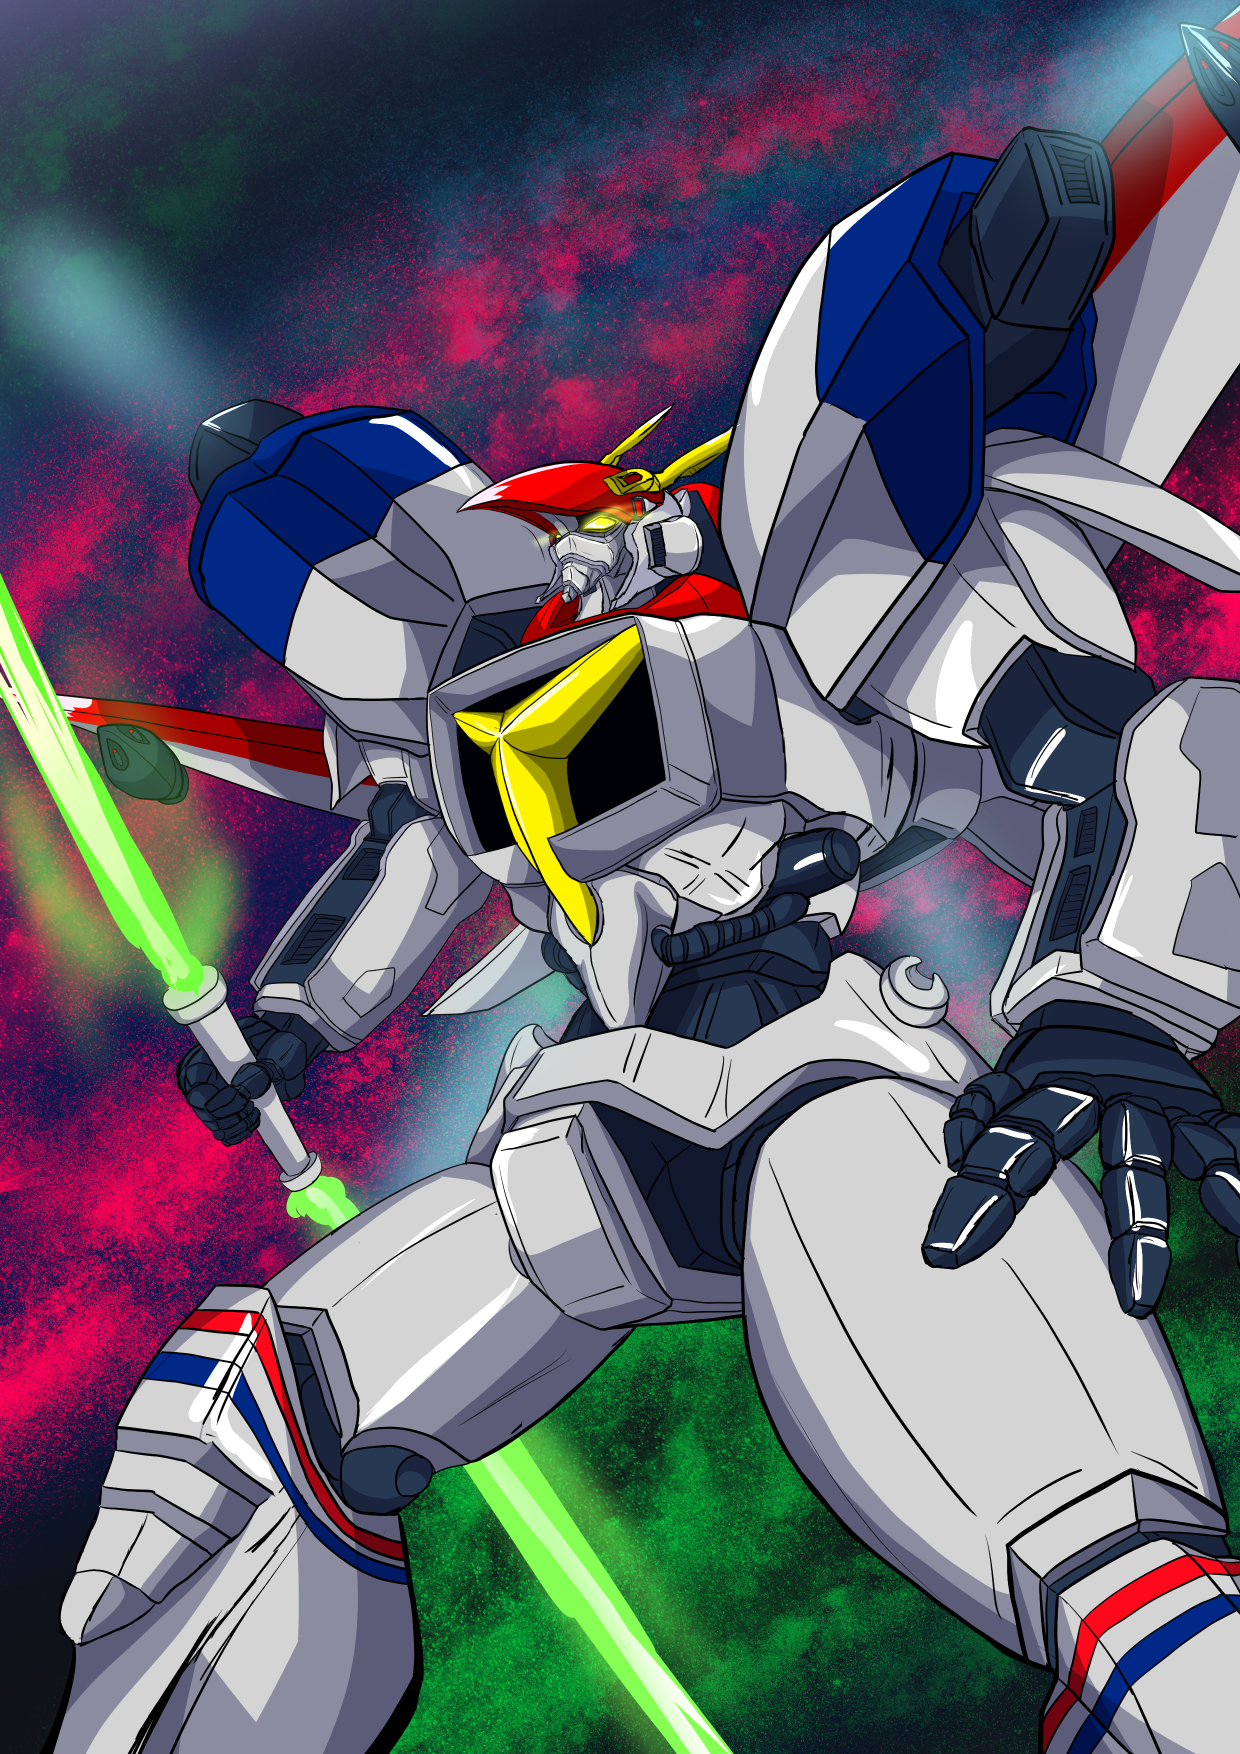 Anime 1240x1754 Dragonar-1 Metal Armor Dragonar anime mechs Super Robot Taisen artwork digital art fan art